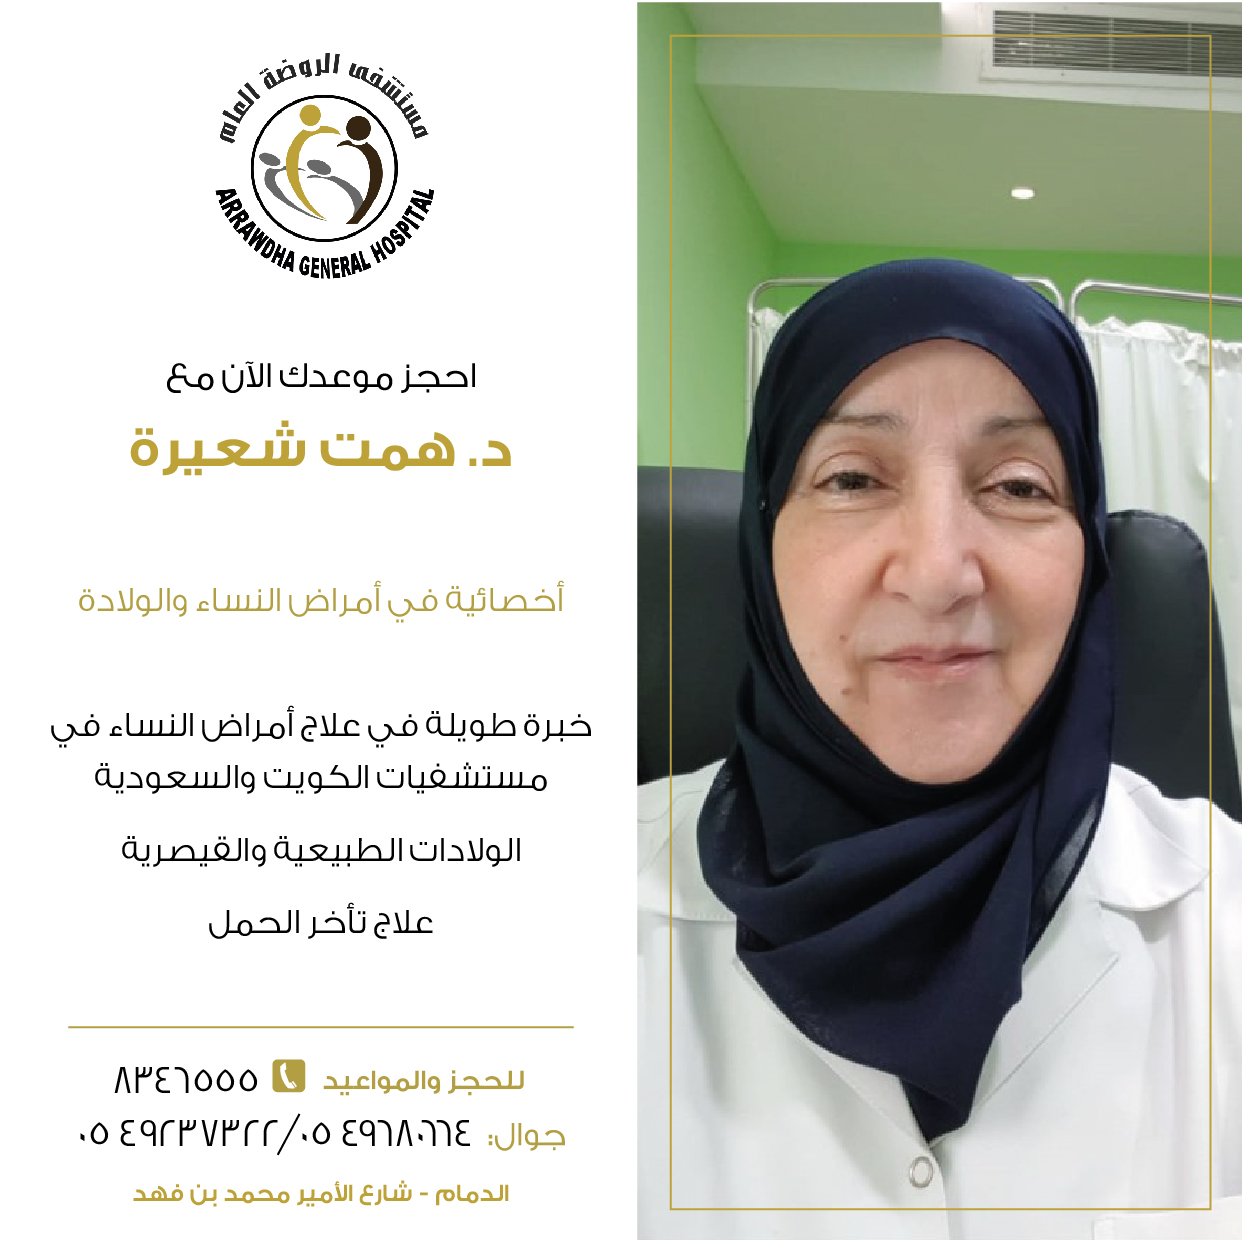 Dr. Hemmat Shairah